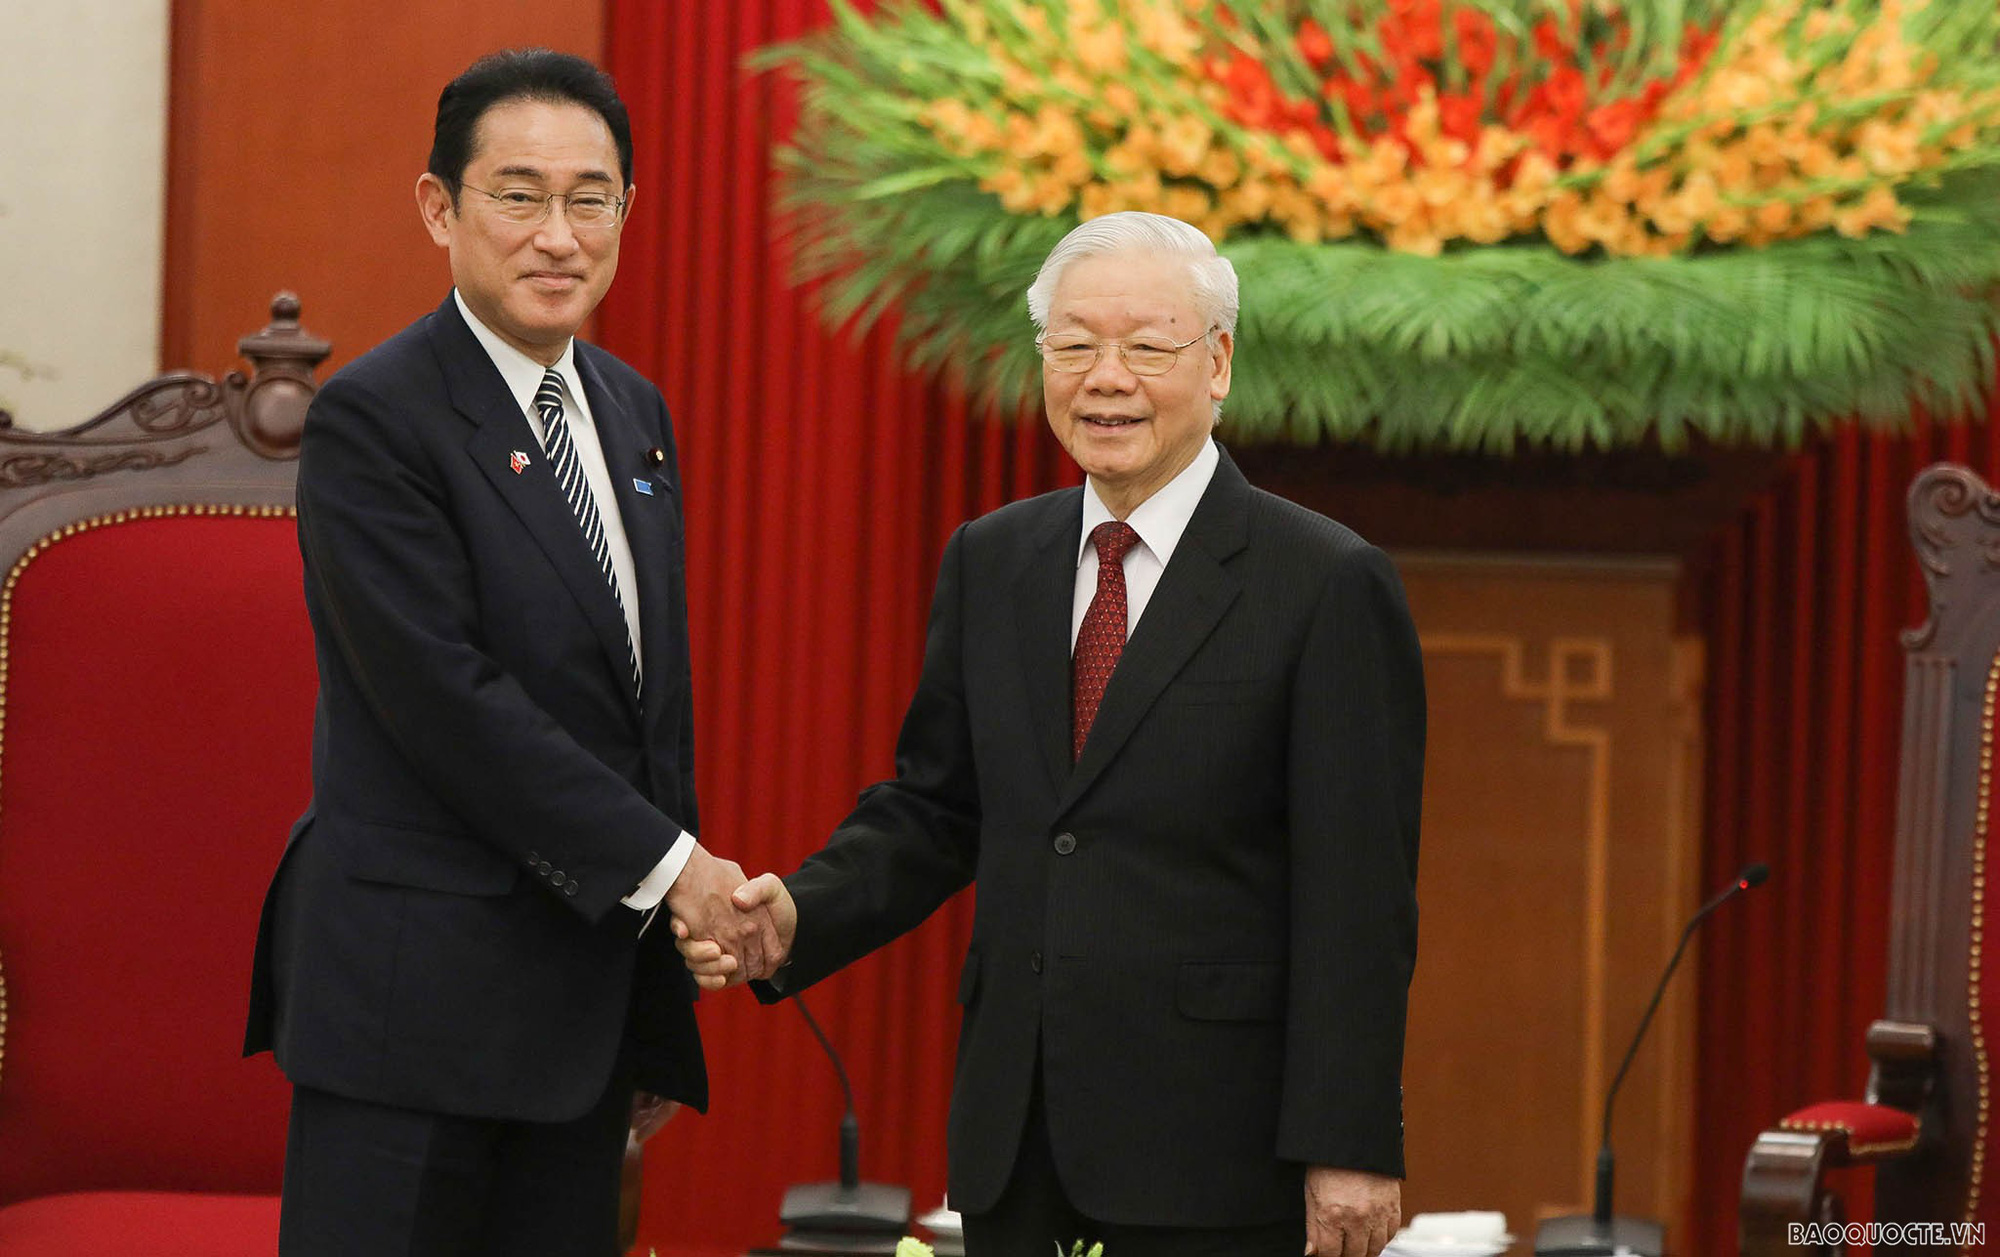 Bringing Vietnam - Japan extensive strategic partnership to new heights - Photo 1.